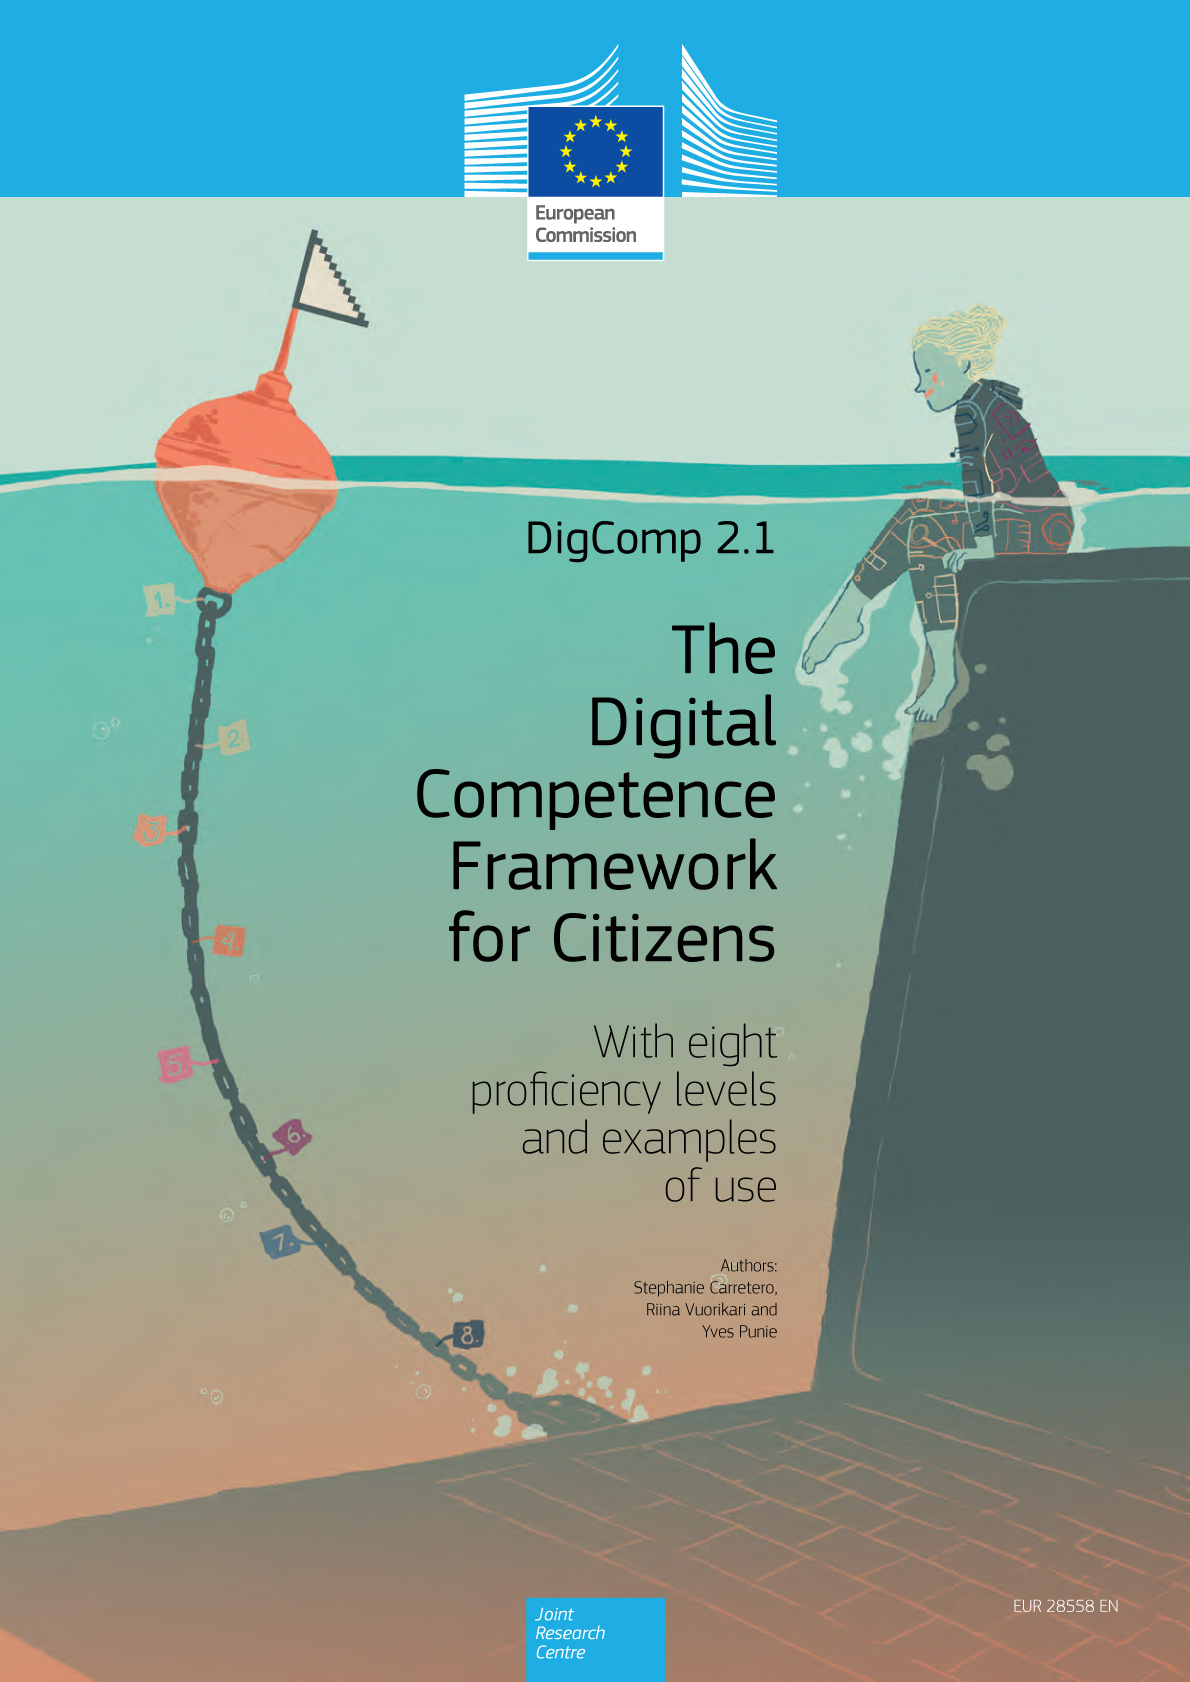 DigComp 2.1 (The Digital Competence Framework)